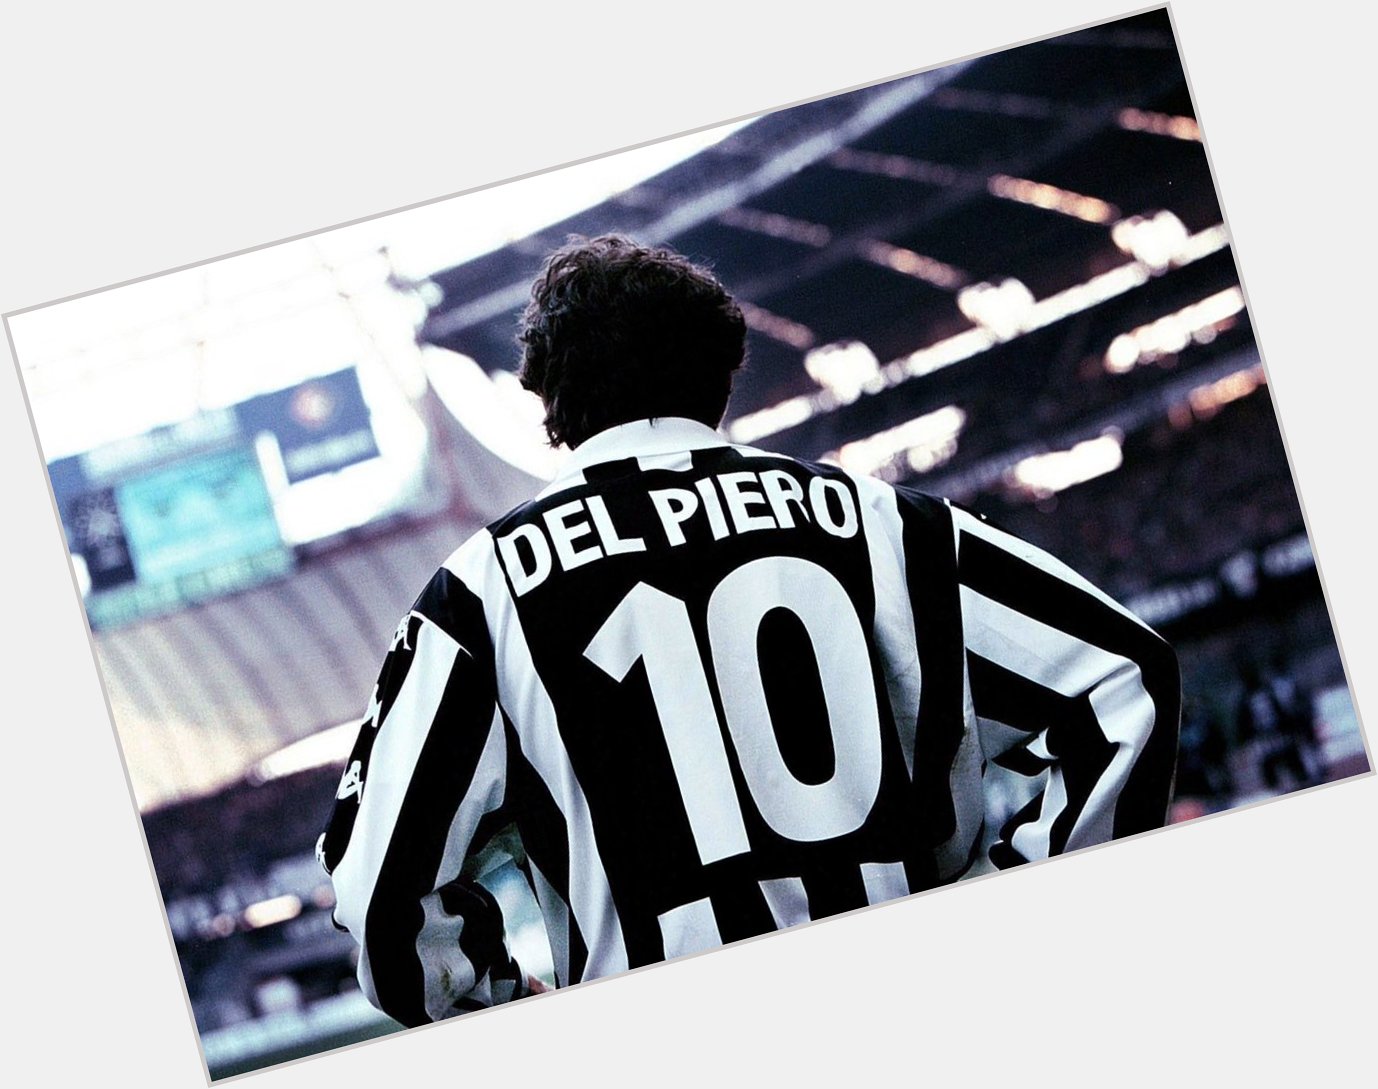 Happy birthday to an absolute legend of Italian football, Alessandro Del Piero 